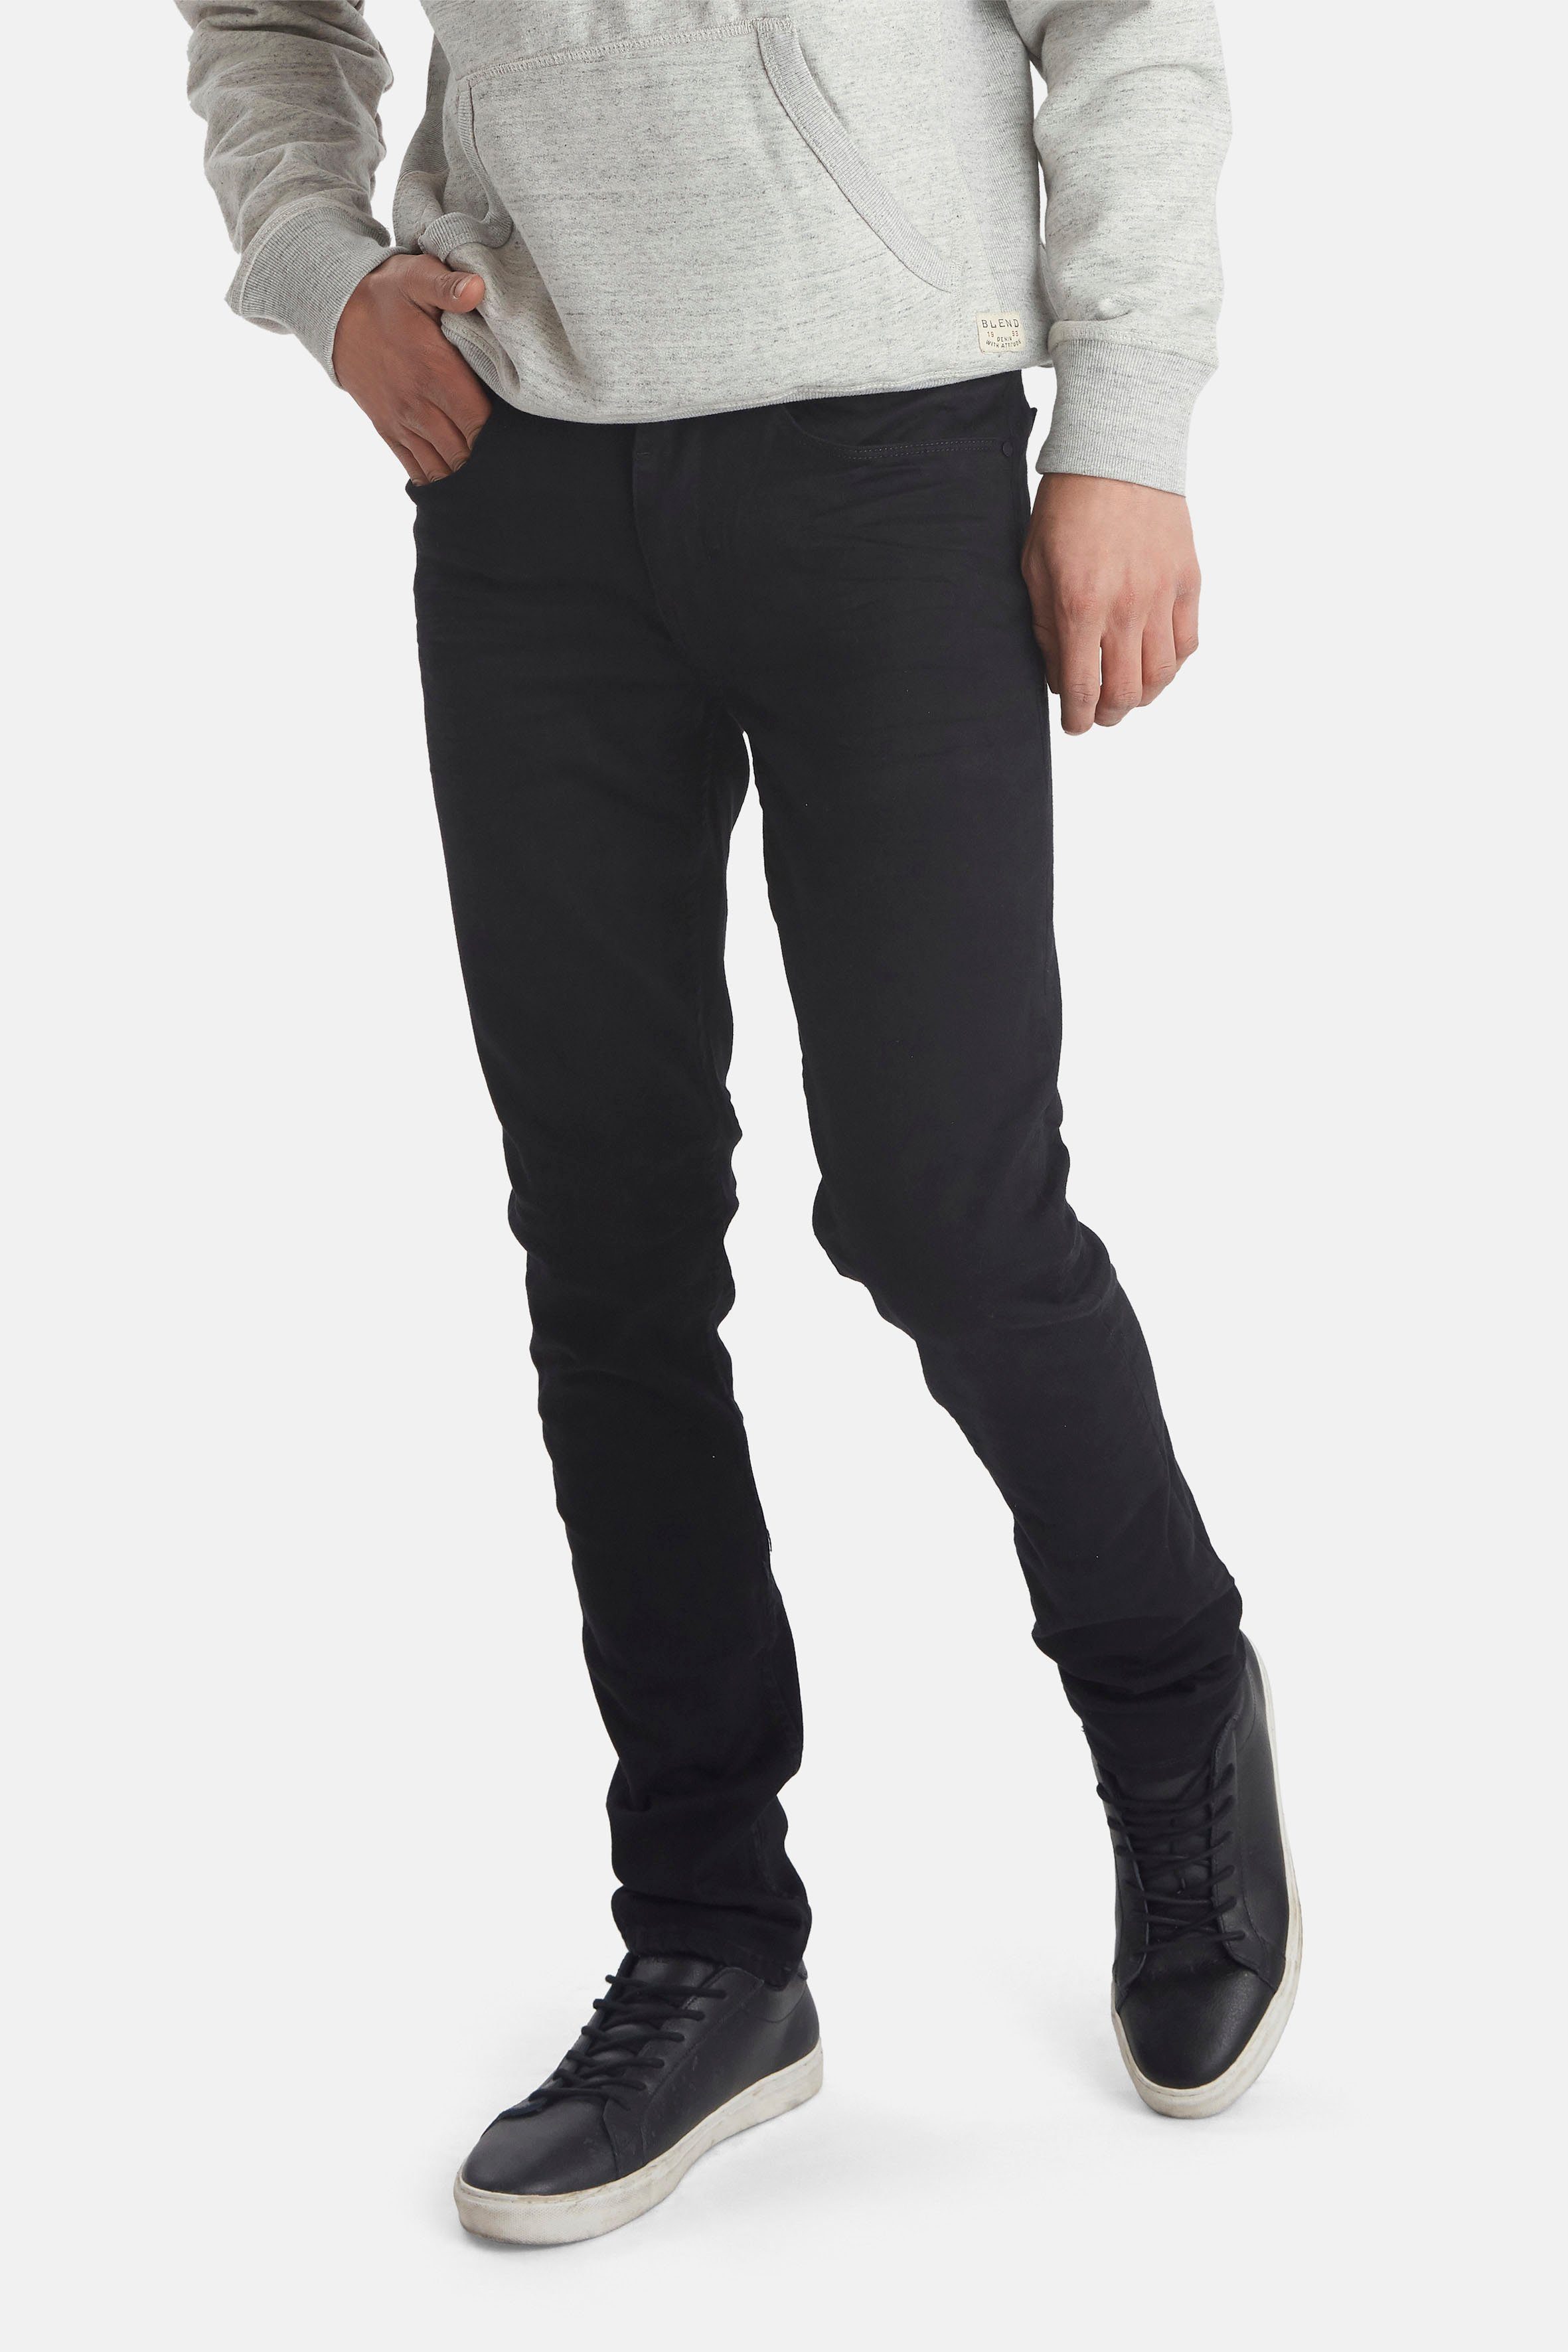 Blend Slim-fit-Jeans Multiflex black Jet